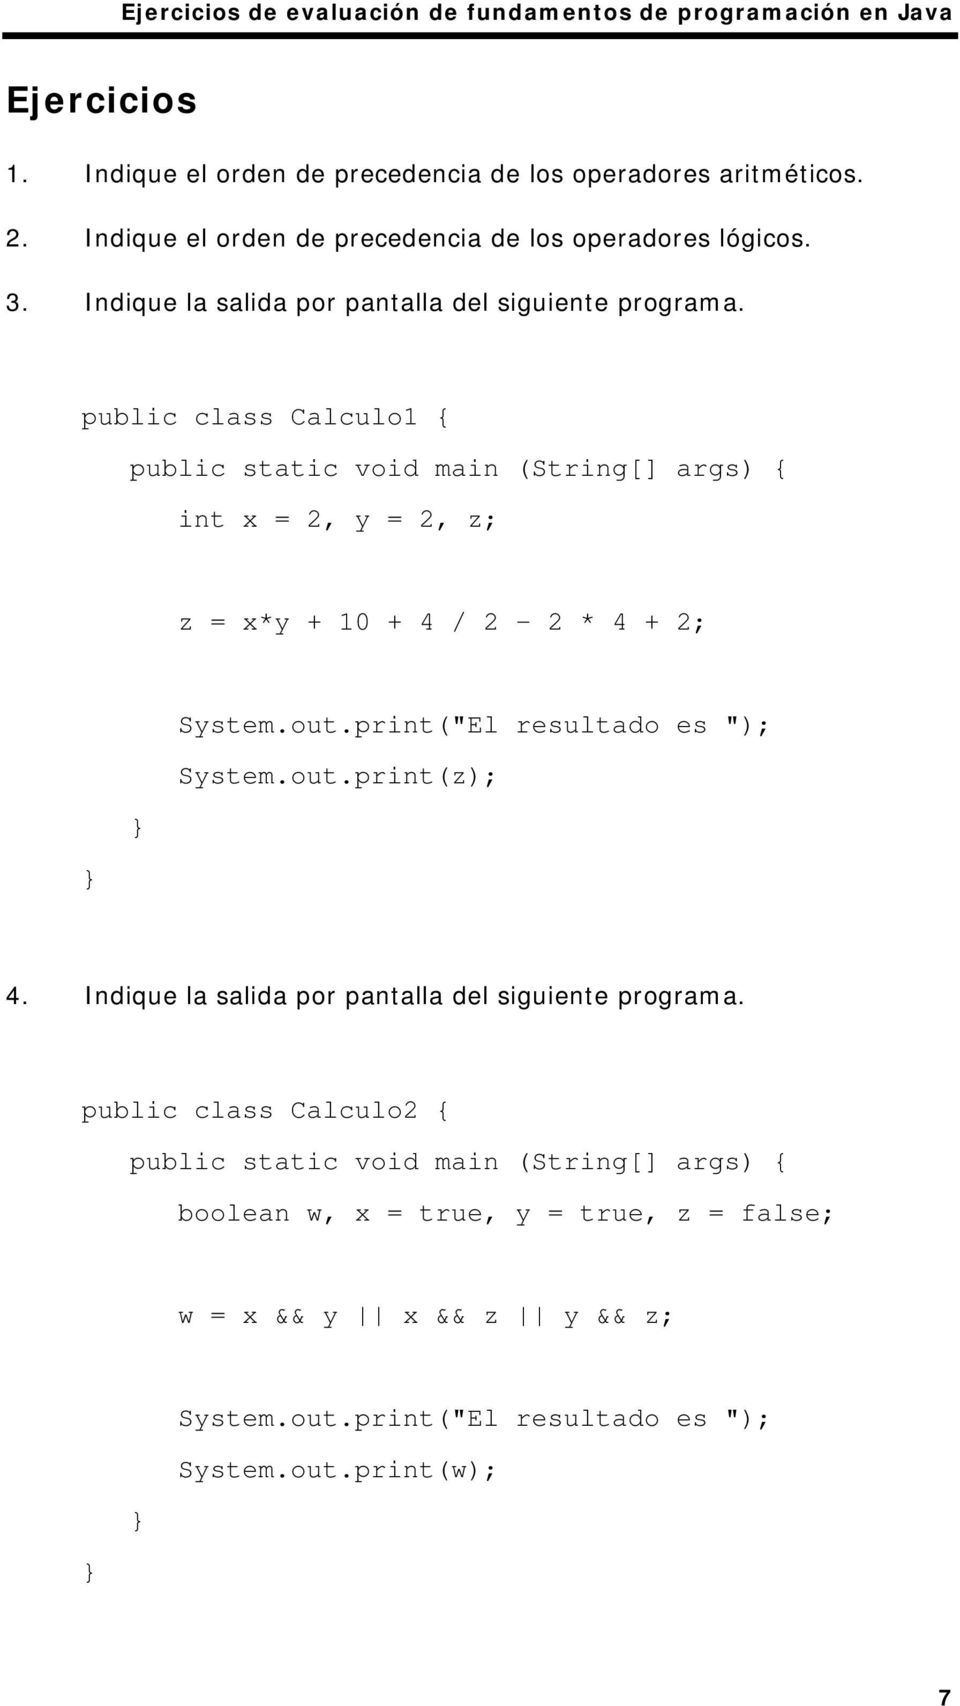 public class Calculo1 { public static void main (String[] args) { int x = 2, y = 2, z; z = x*y + 10 + 4 / 2-2 * 4 + 2; System.out.print("El resultado es "); System.out.print(z); 4.